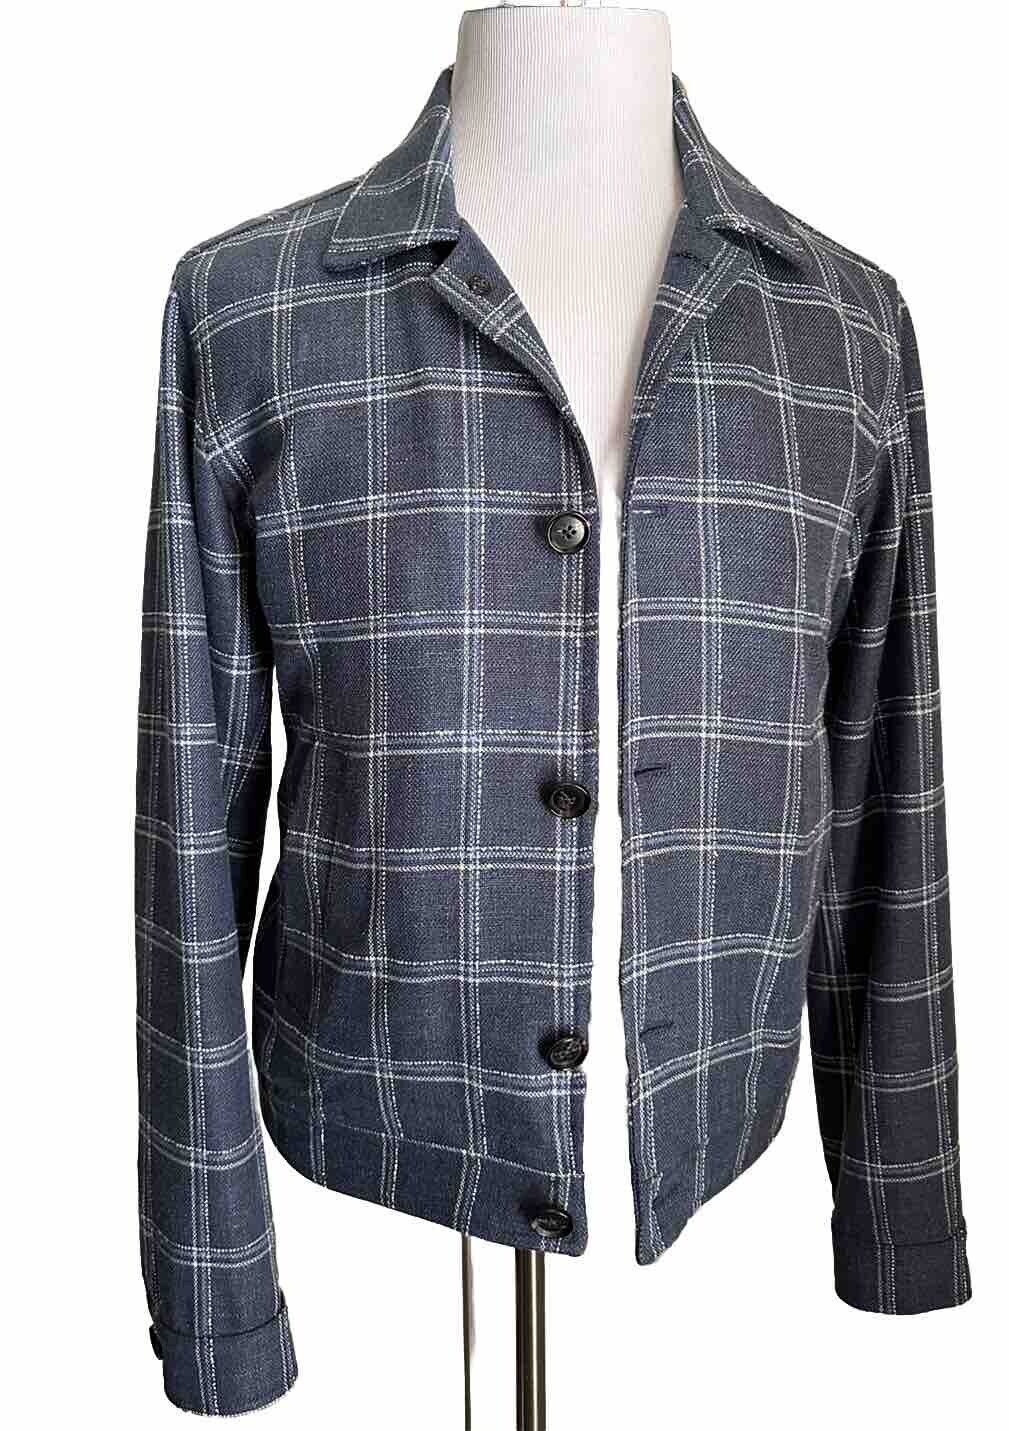 New $2750 Isaia Portofino Plaid Wool Blend Shirt Jacket Blue 42 US/52 Eu Italy